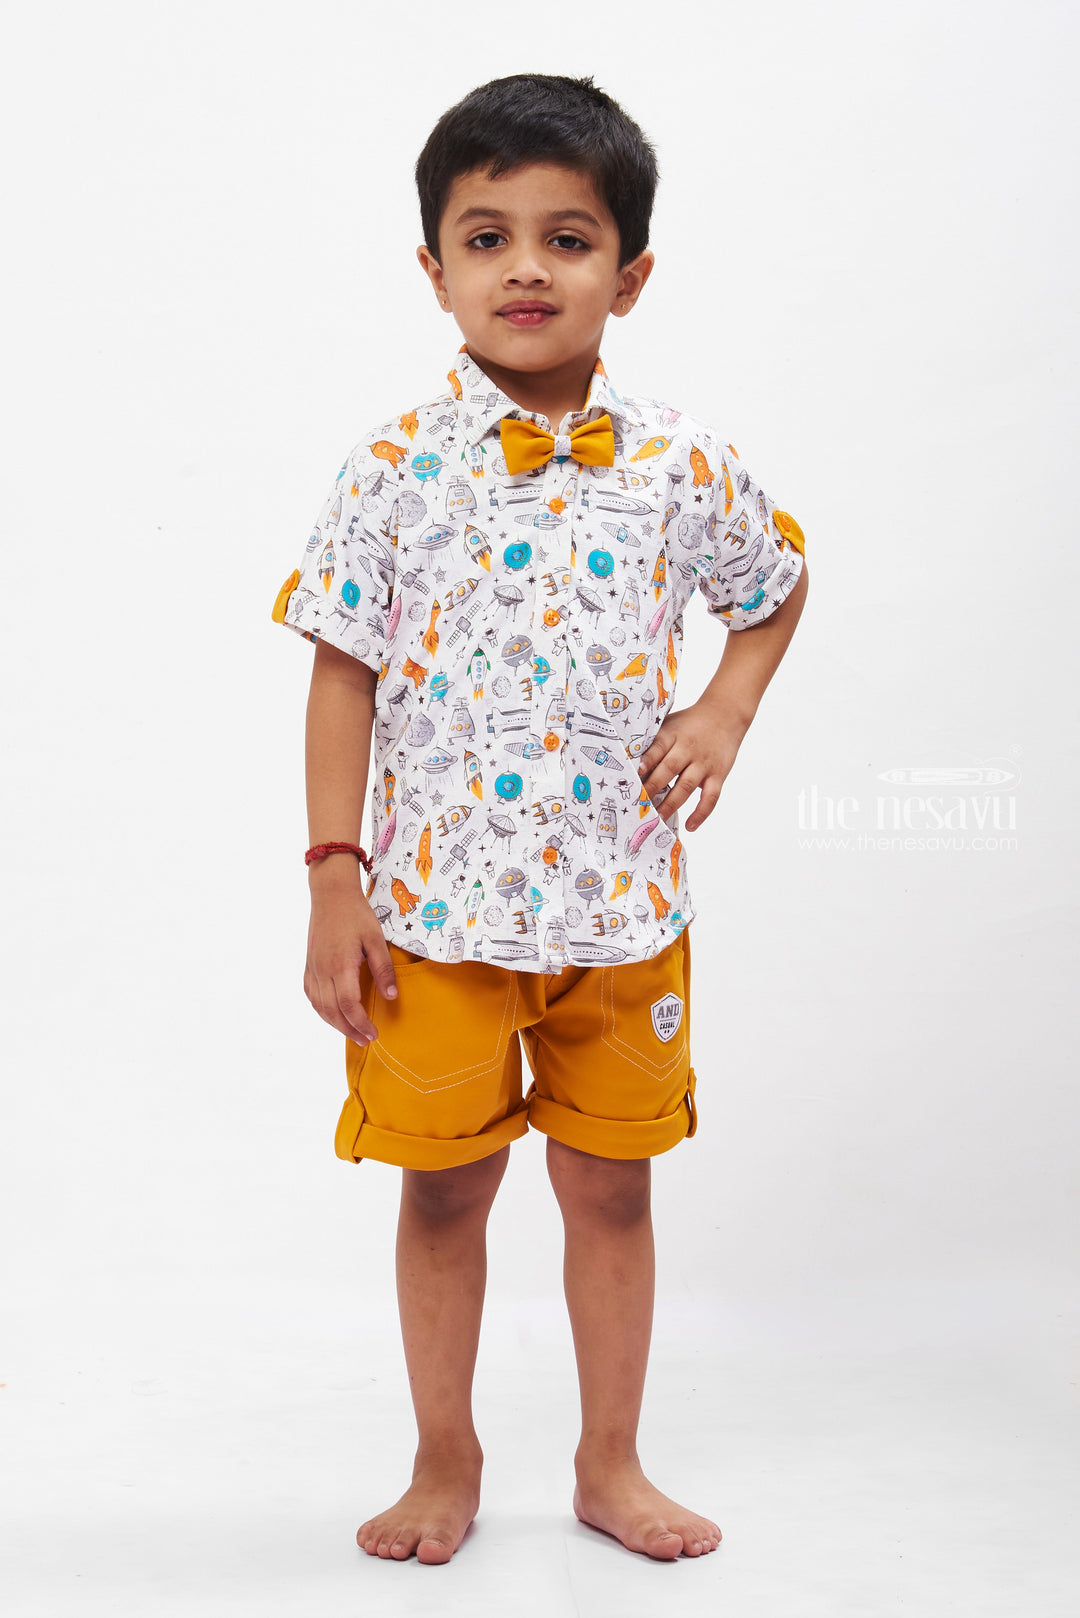 The Nesavu Boys Casual Set Boys Graphic Shirt and Mustard Shorts Set - Trendy & Comfortable Nesavu 12 (3M) / Yellow BCS001B-12 Boys Space Themed Shirt & Mustard Shorts Combo | Casual Kids Fashion | The Nesavu